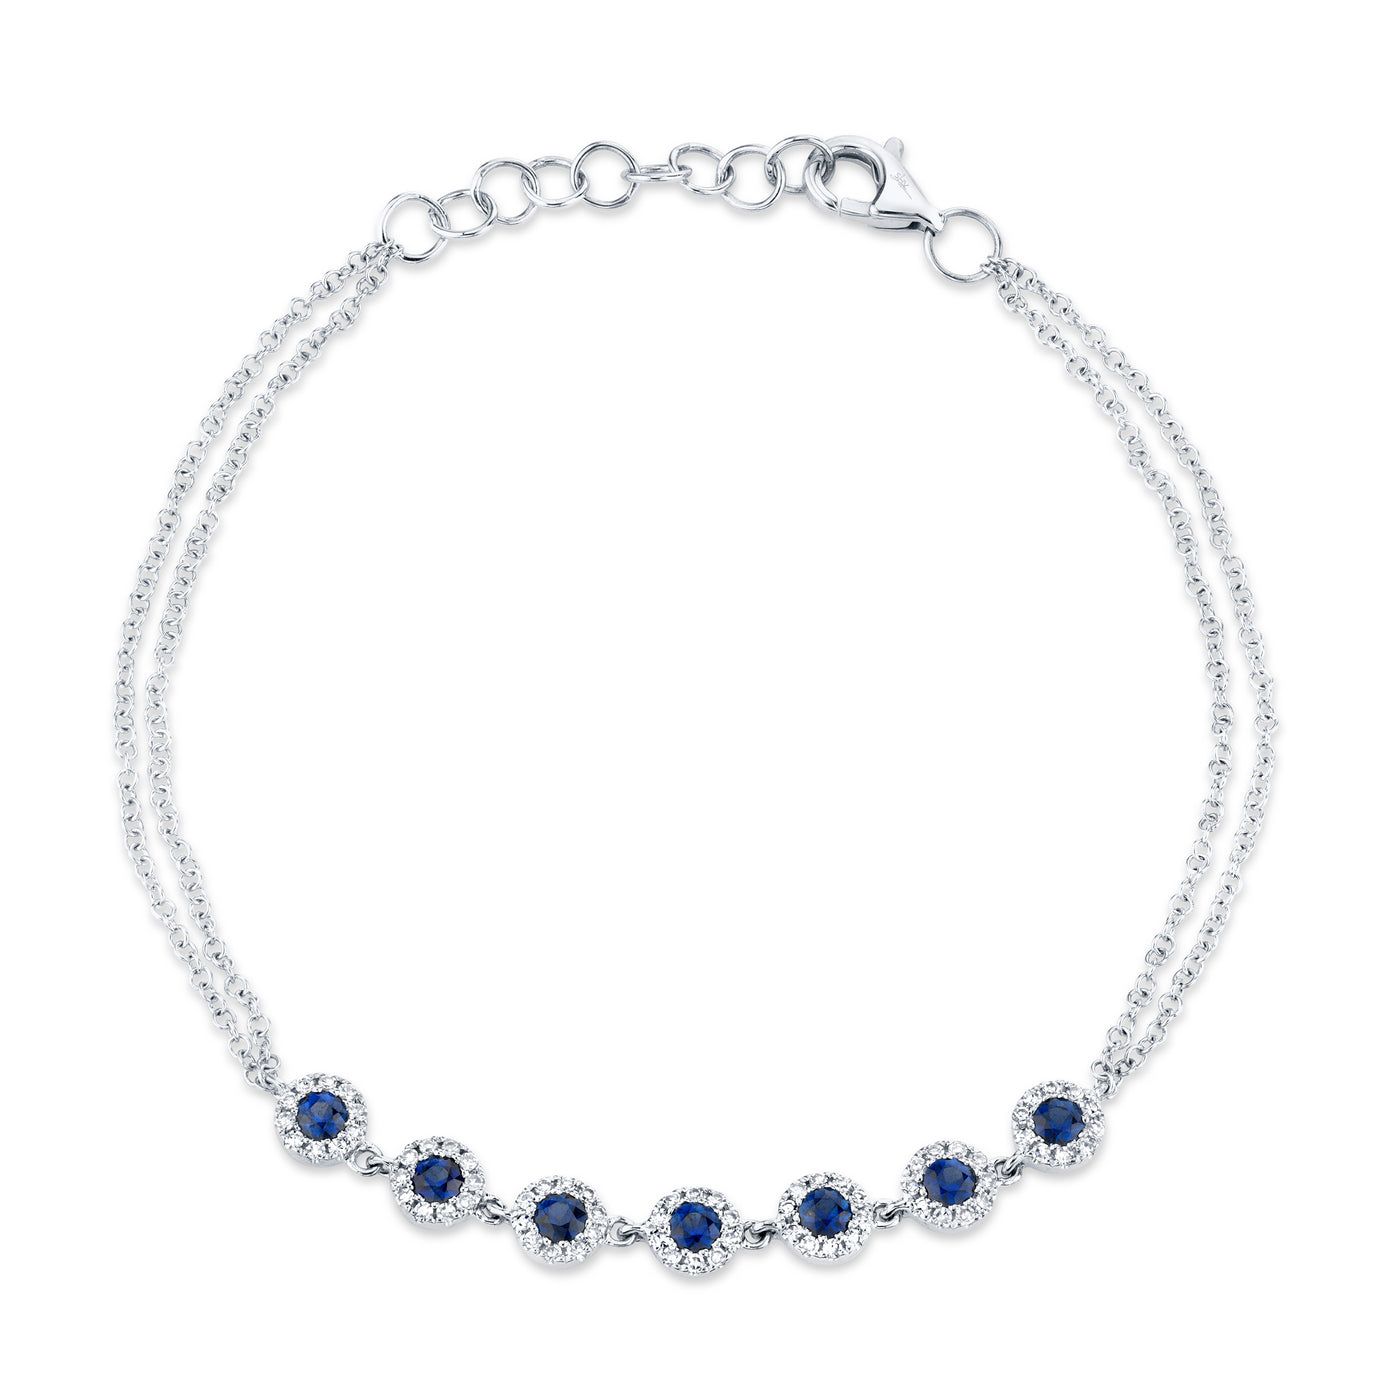 Blue Sapphire and Diamond Bracelet by Shy Creation